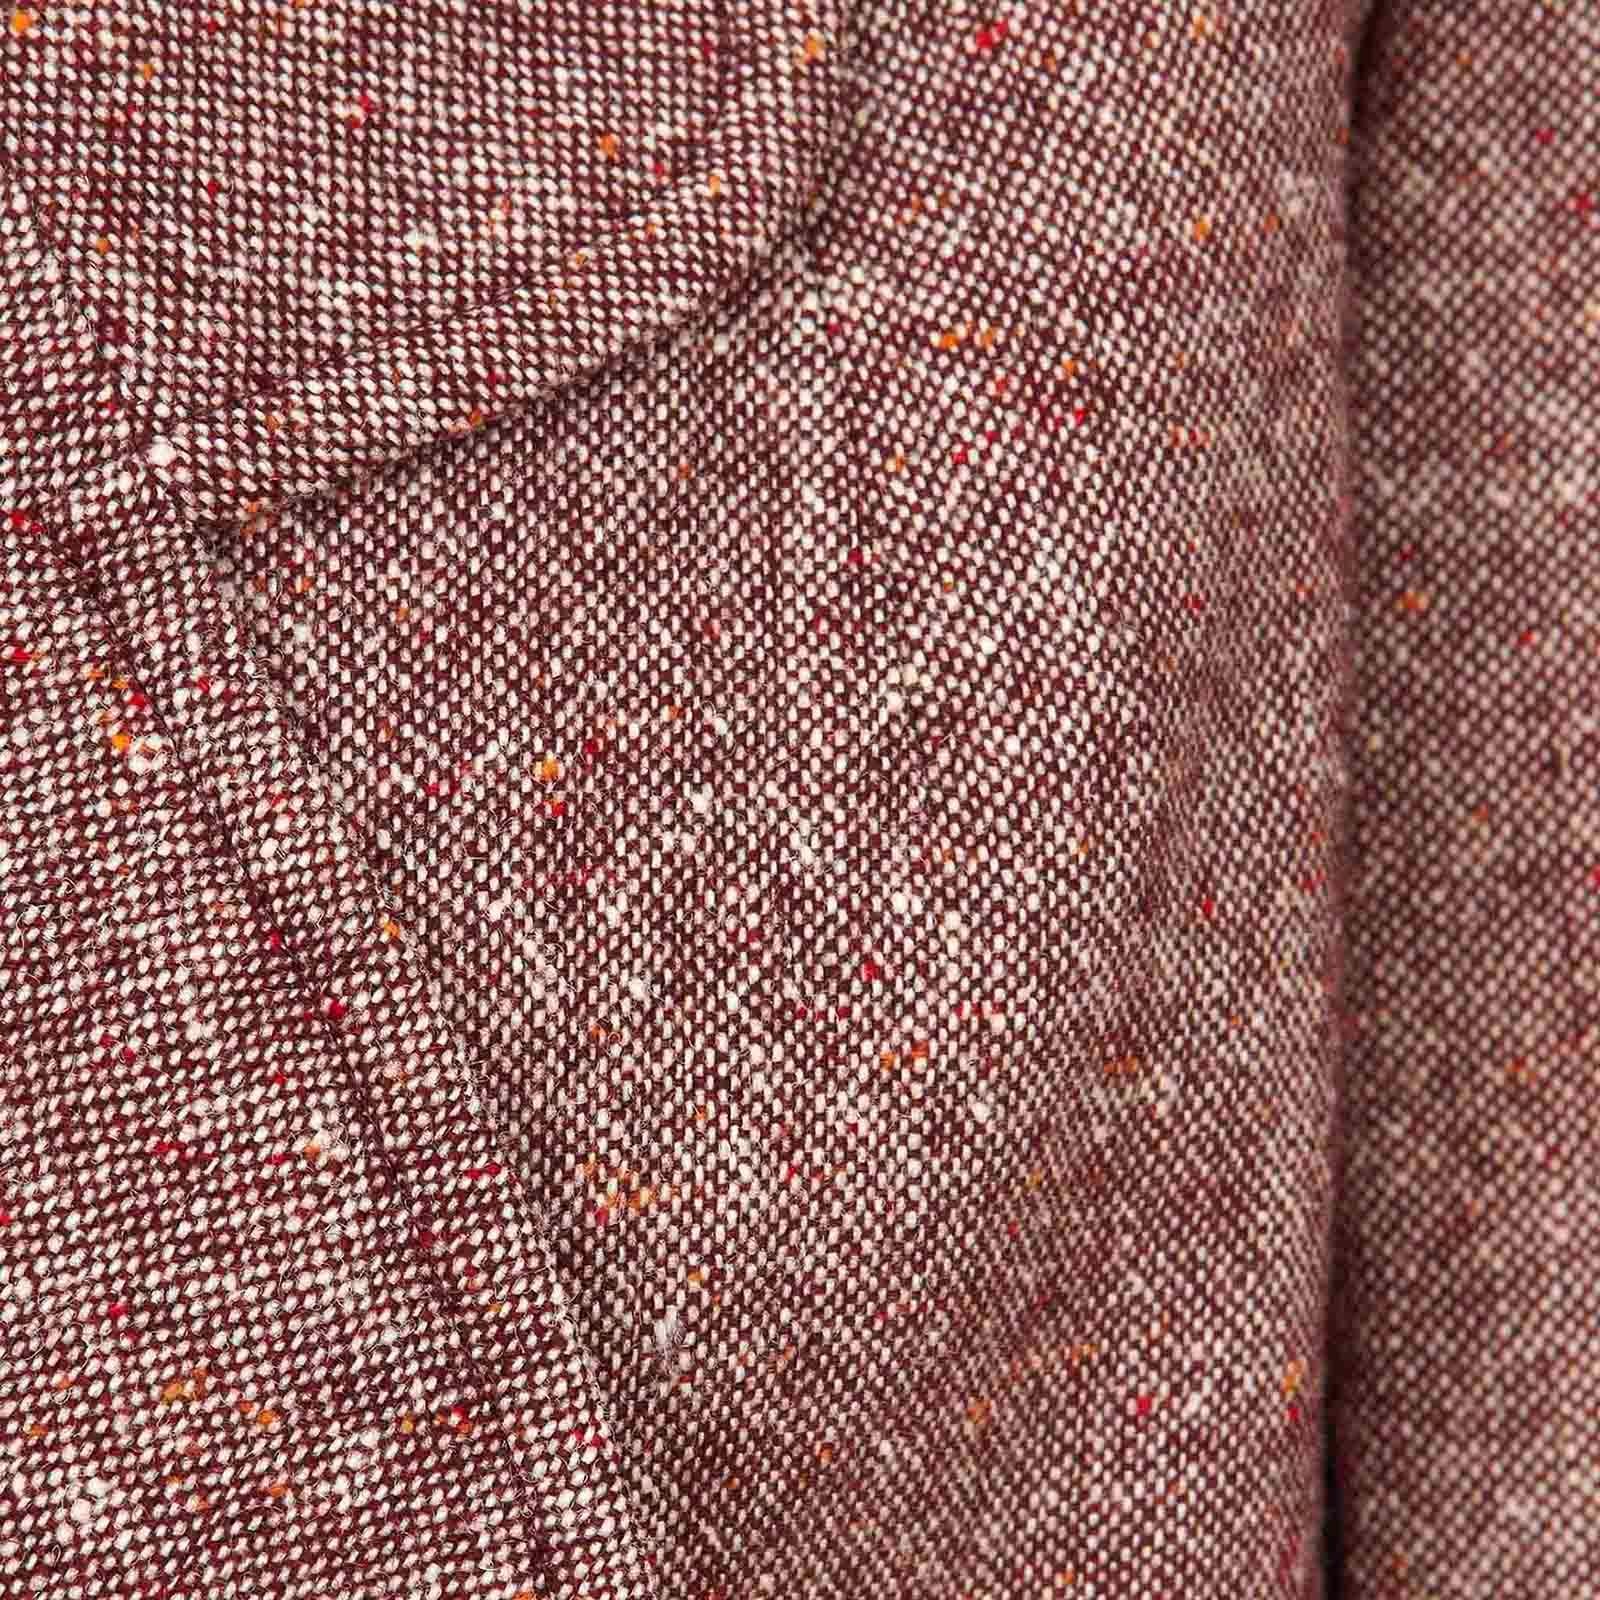 Product Details: Rare - Bill Gibb - Tweed Maxi Wrap-Around Coat
Label: Bill Gibb
Era: c.1970
Fabric Content: Tweed - Wool
Size: UK 8 - (Fits UK 8 to UK 12)
Bust: 39